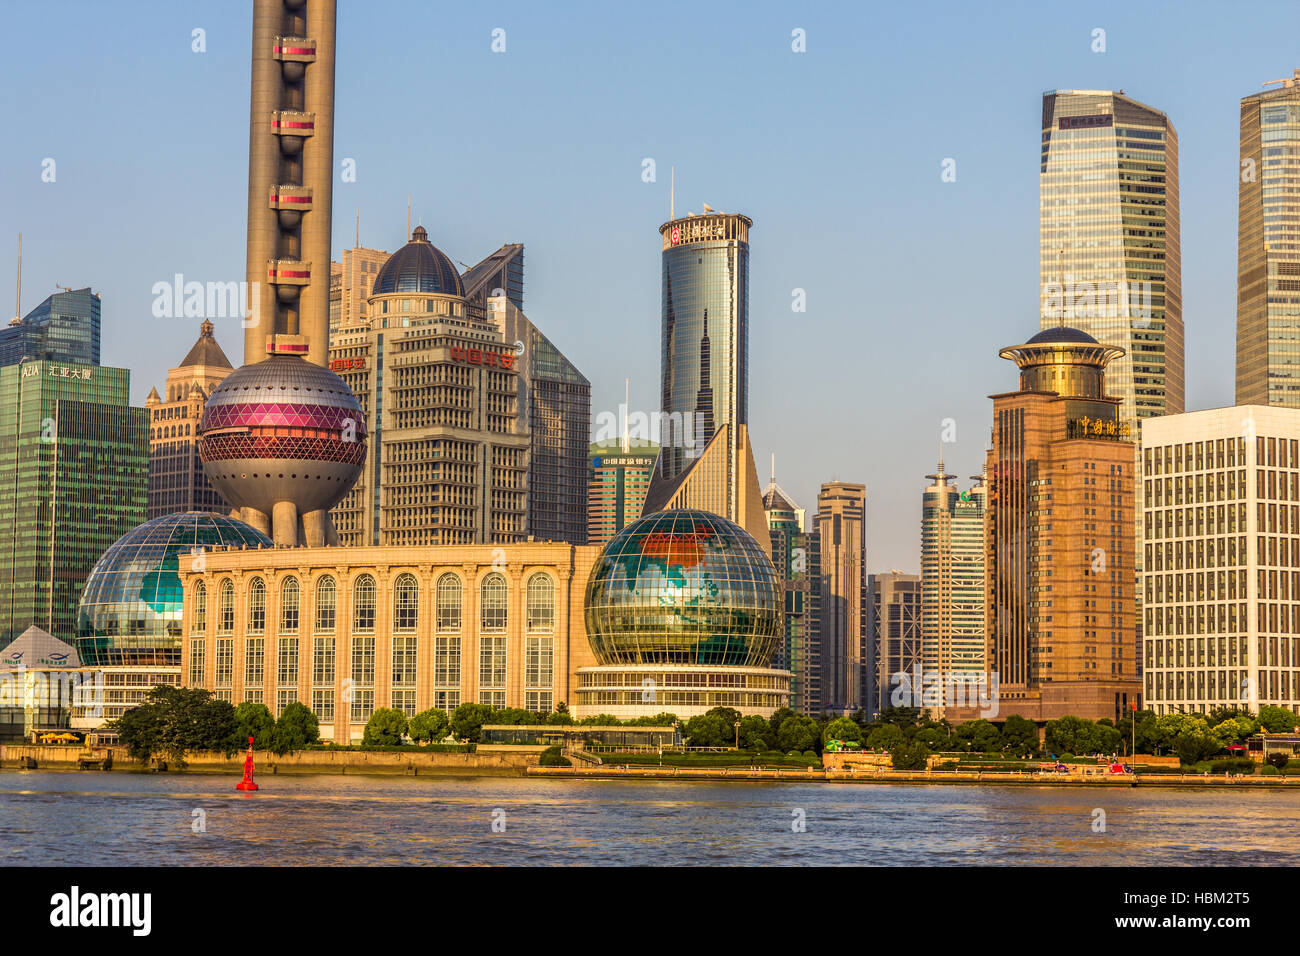 Shanghai Stock Photo